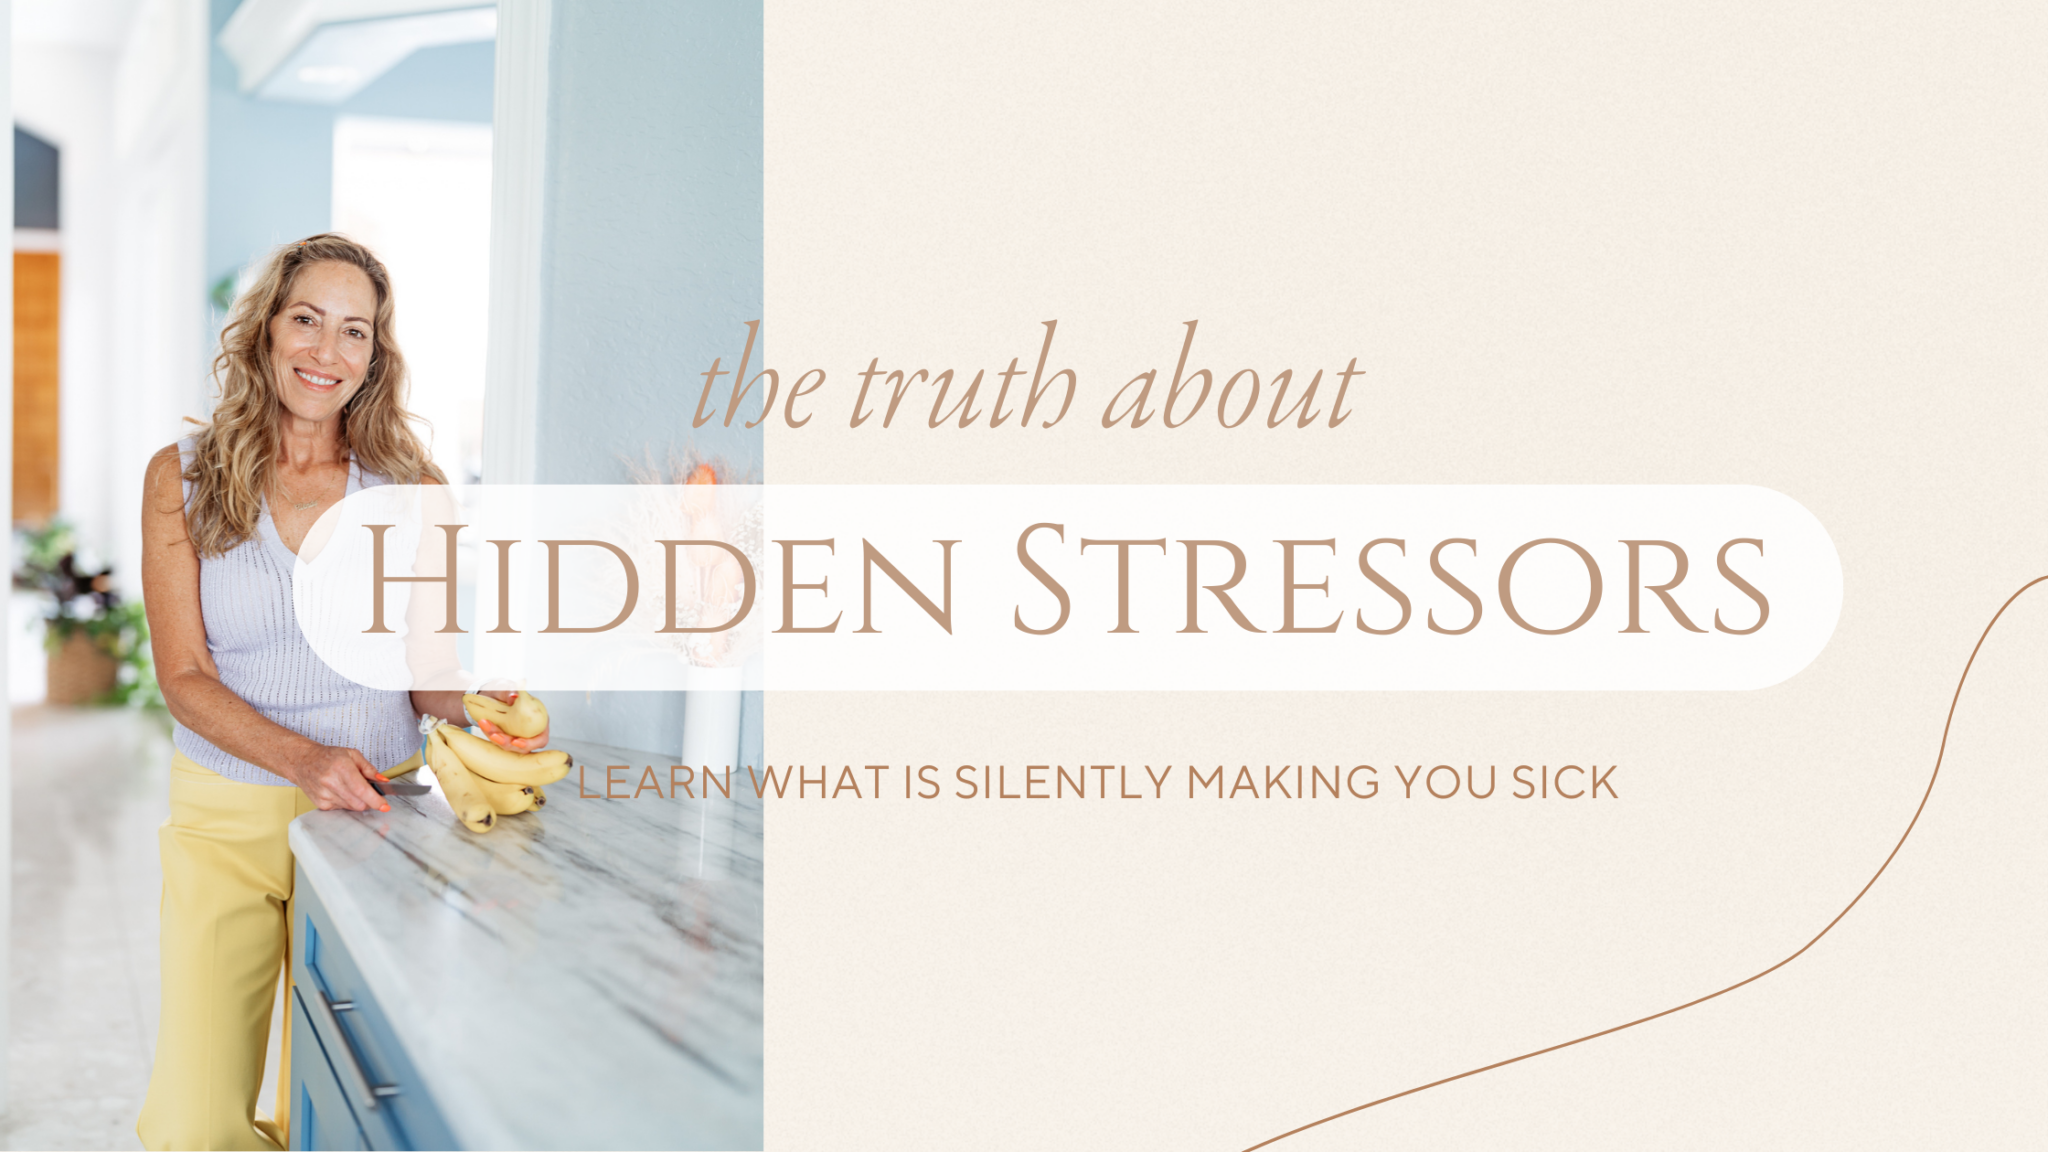 hidden stressors blog post cover